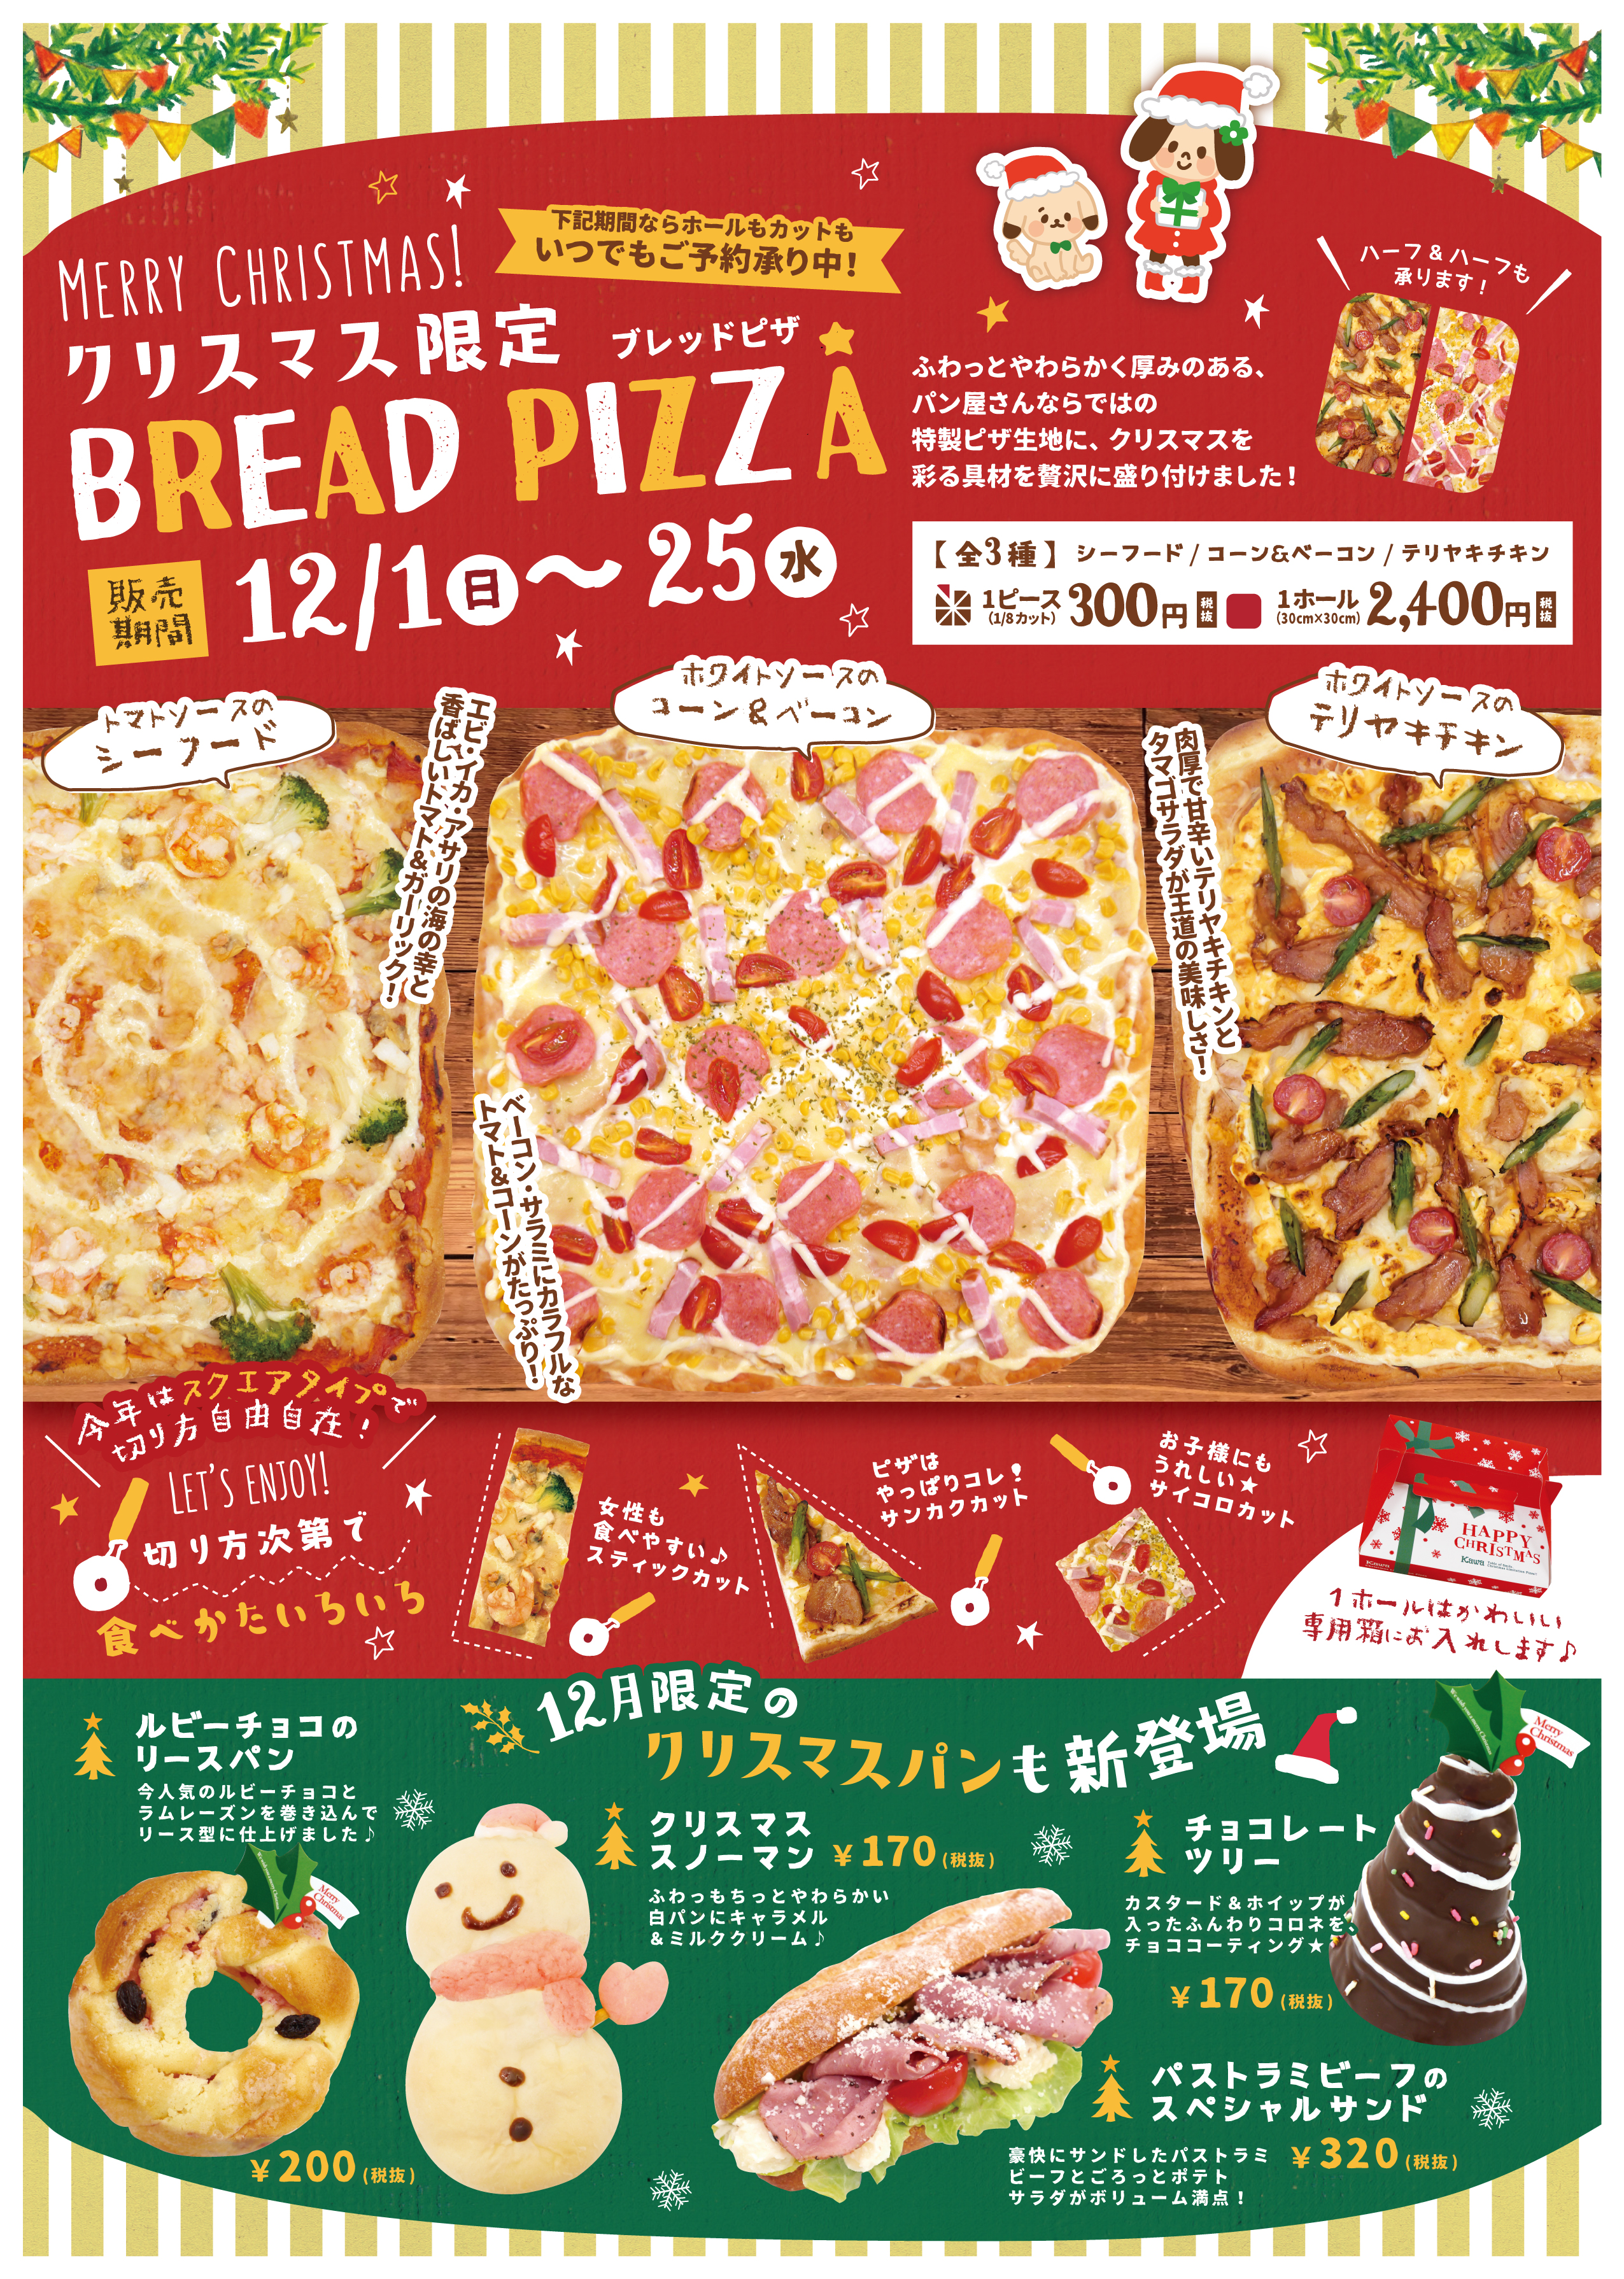 19 Kawaクリスマスピッツァ クリスマスパン ラインナップ 12 1 日 より販売開始 パン工房カワ